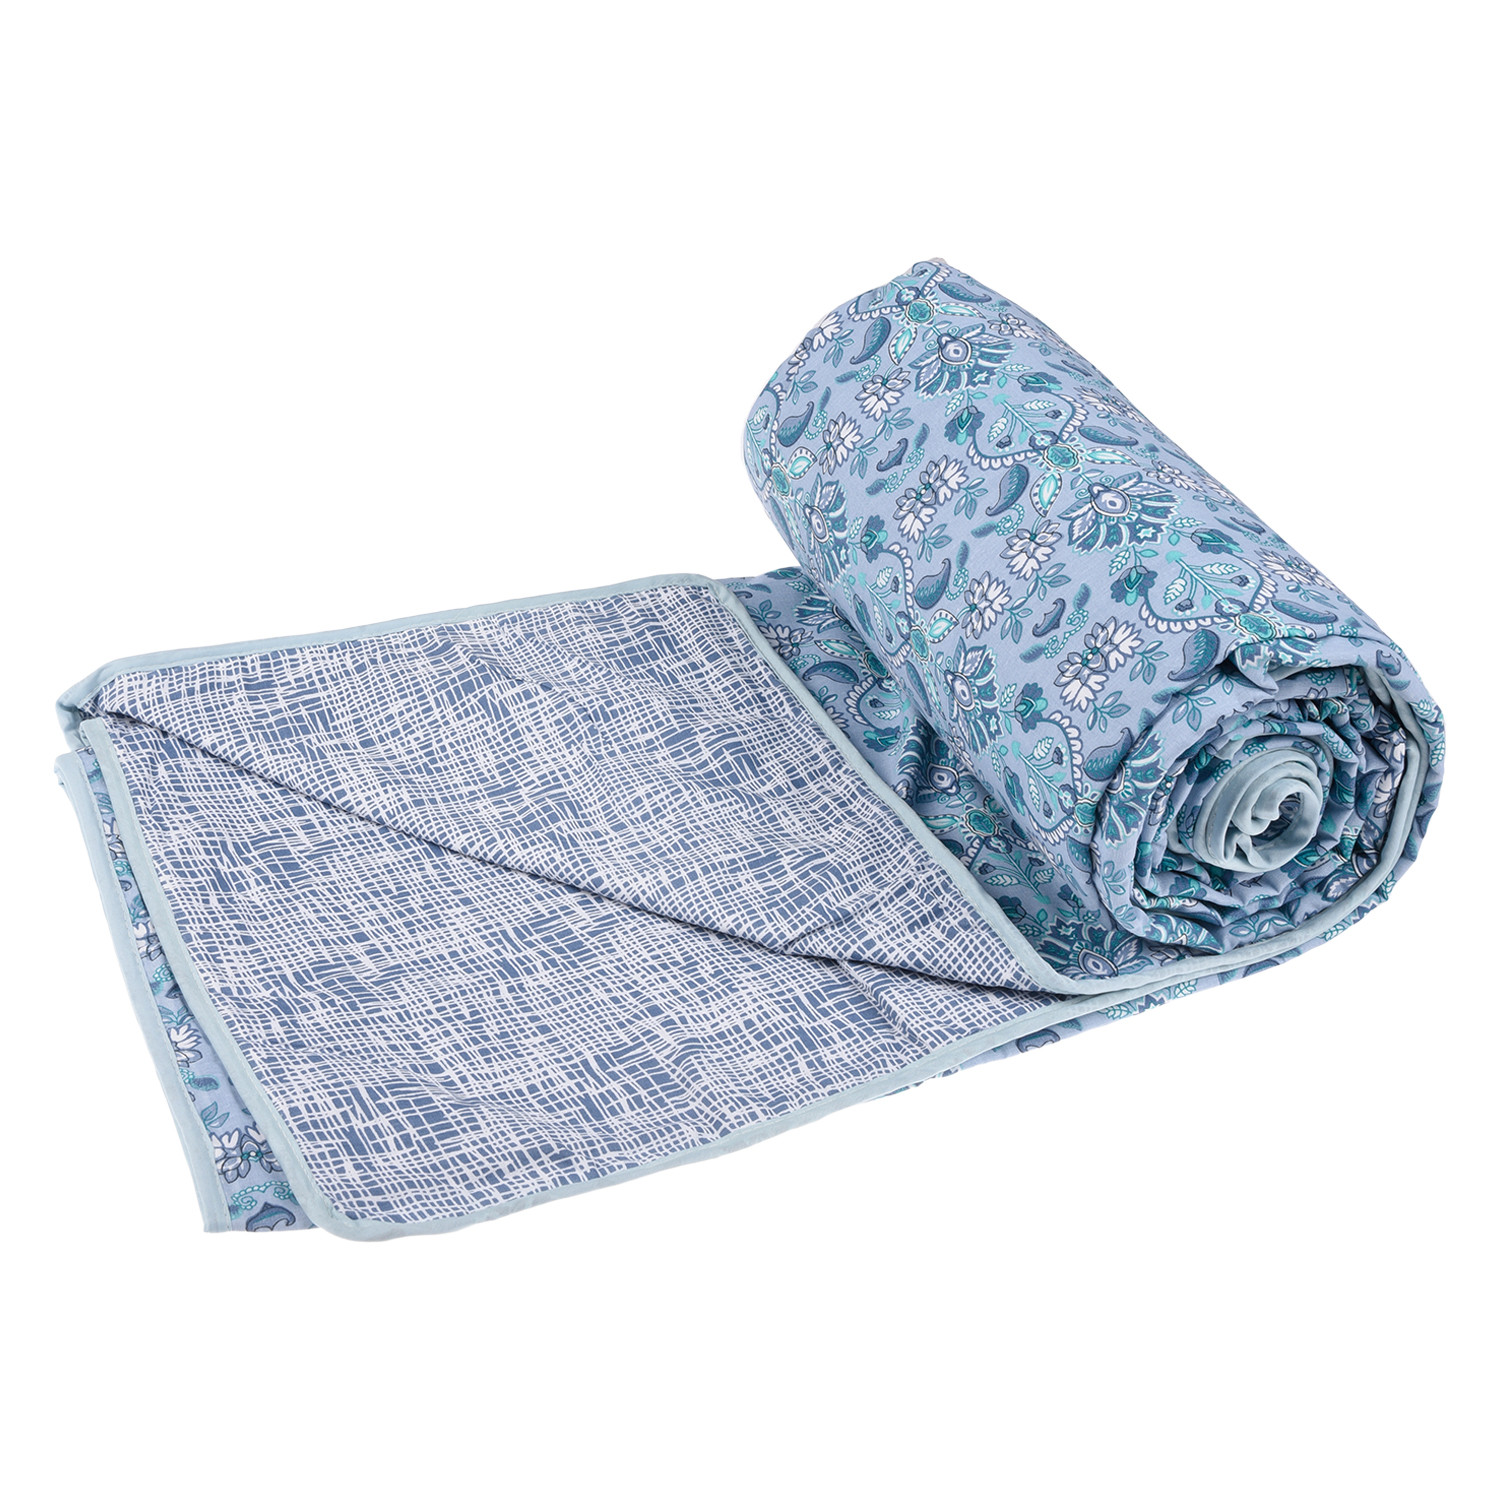 Kuber Industries Blanket | Cotton Double Bed Dohar | Blanket For Home | Reversible AC Blanket For Travelling | Blanket For Summer | Blanket For Winters | Carry Print | Green